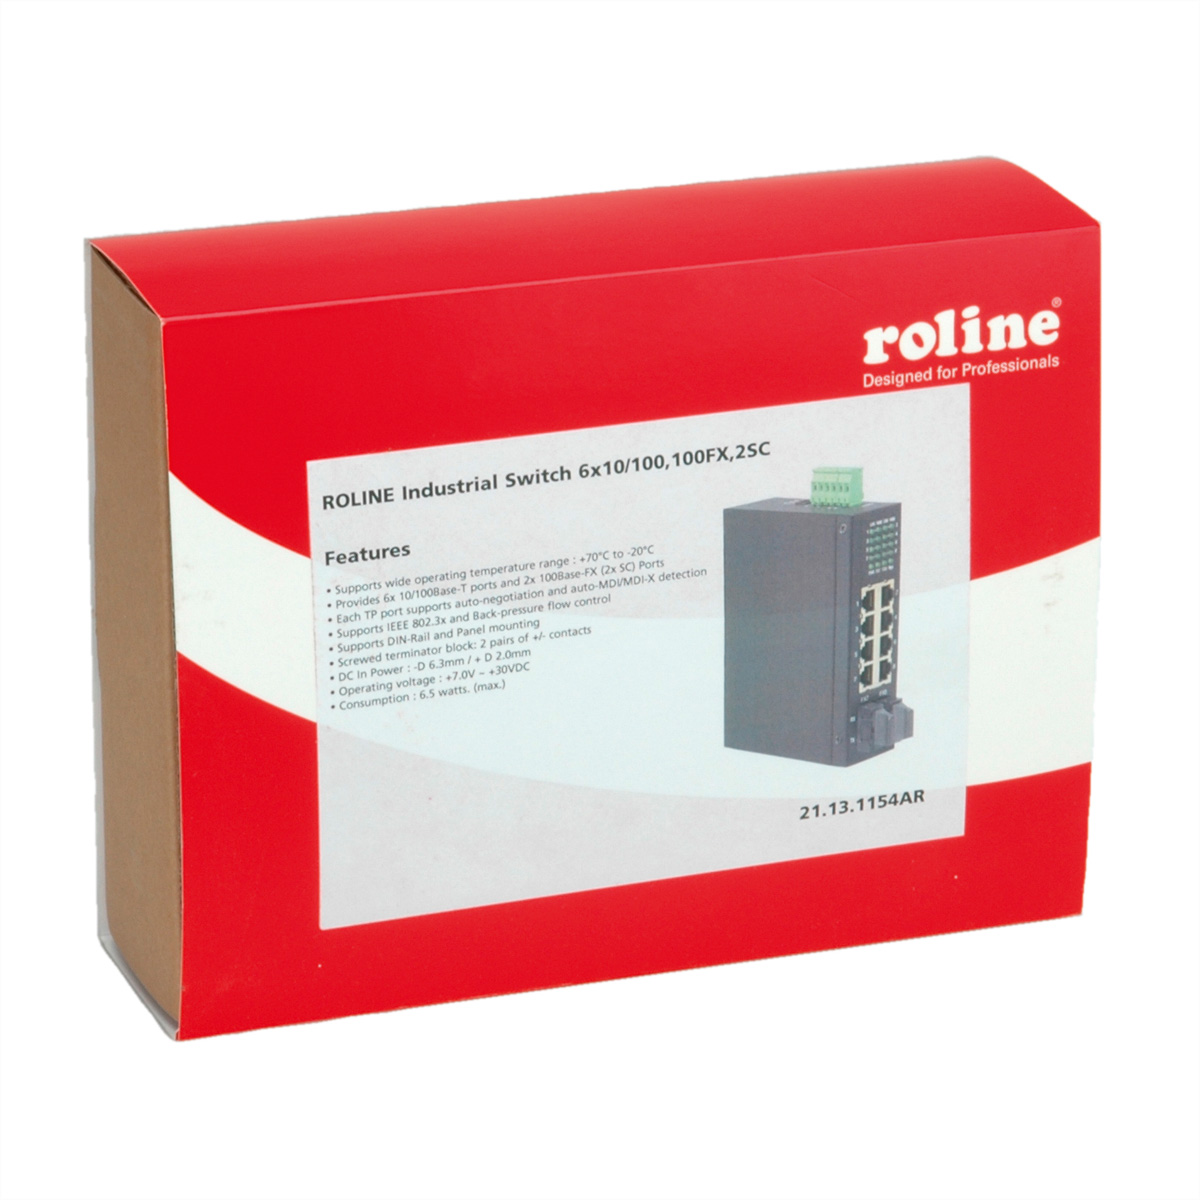 ROLINE Industrie RJ-45 oder Ethernet 2x Switch Switch, RJ-45 unmanaged SC, Fast 6x sowie